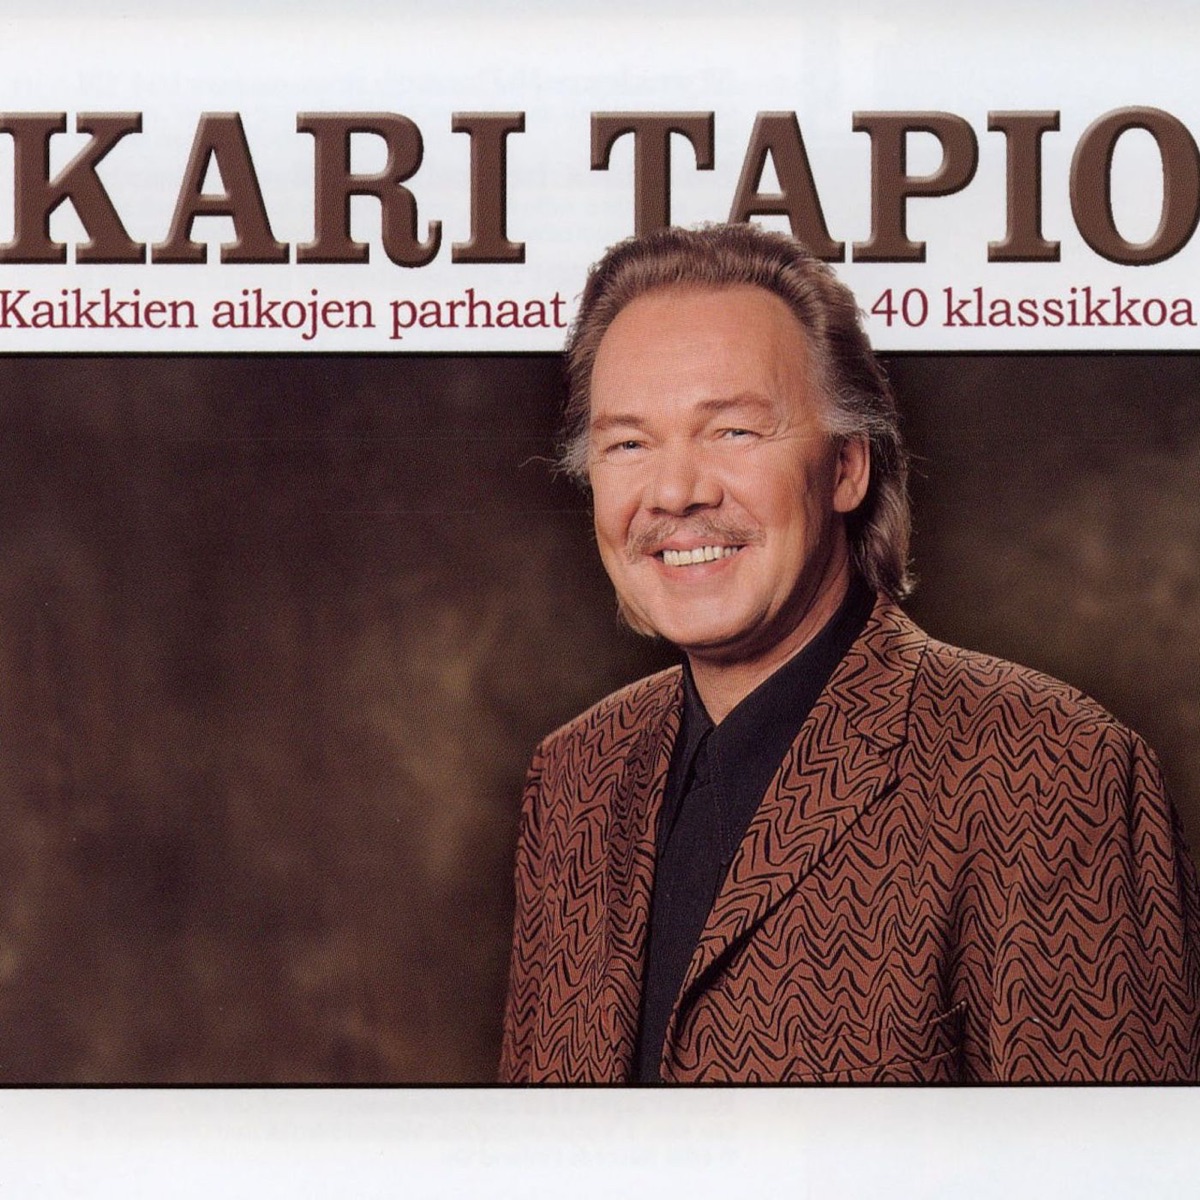 Sydämeni lyö by Kari Tapio on Apple Music